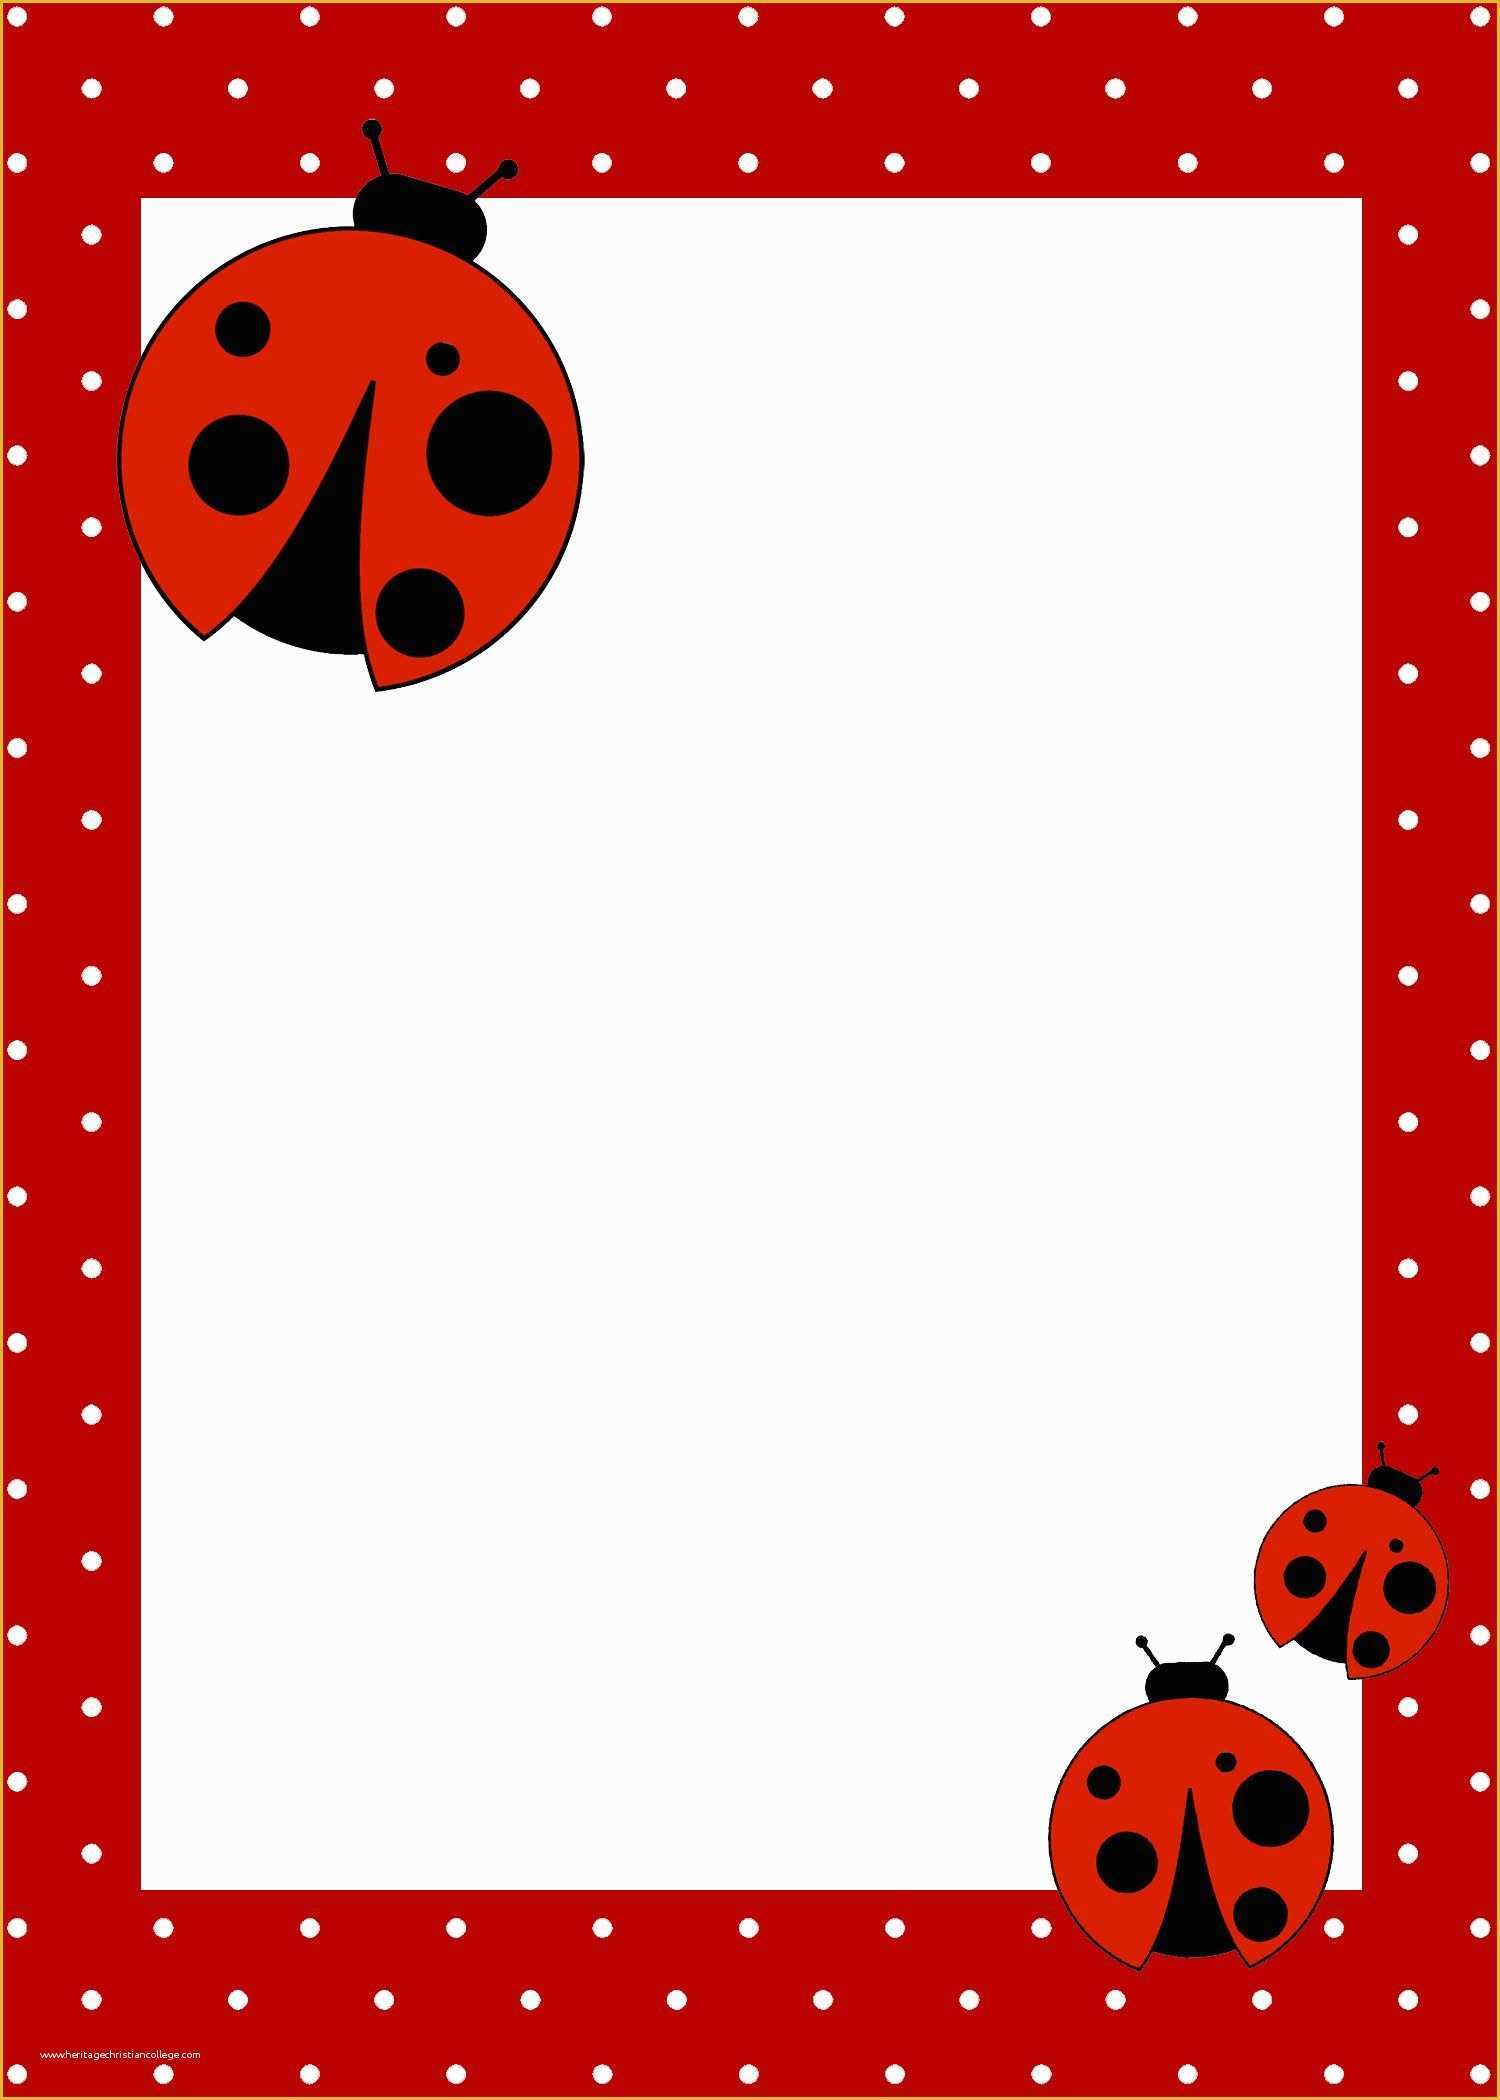 Free Printable Ladybug Baby Shower Invitations Templates Of Ladybug Birthday Invitations On Pinterest